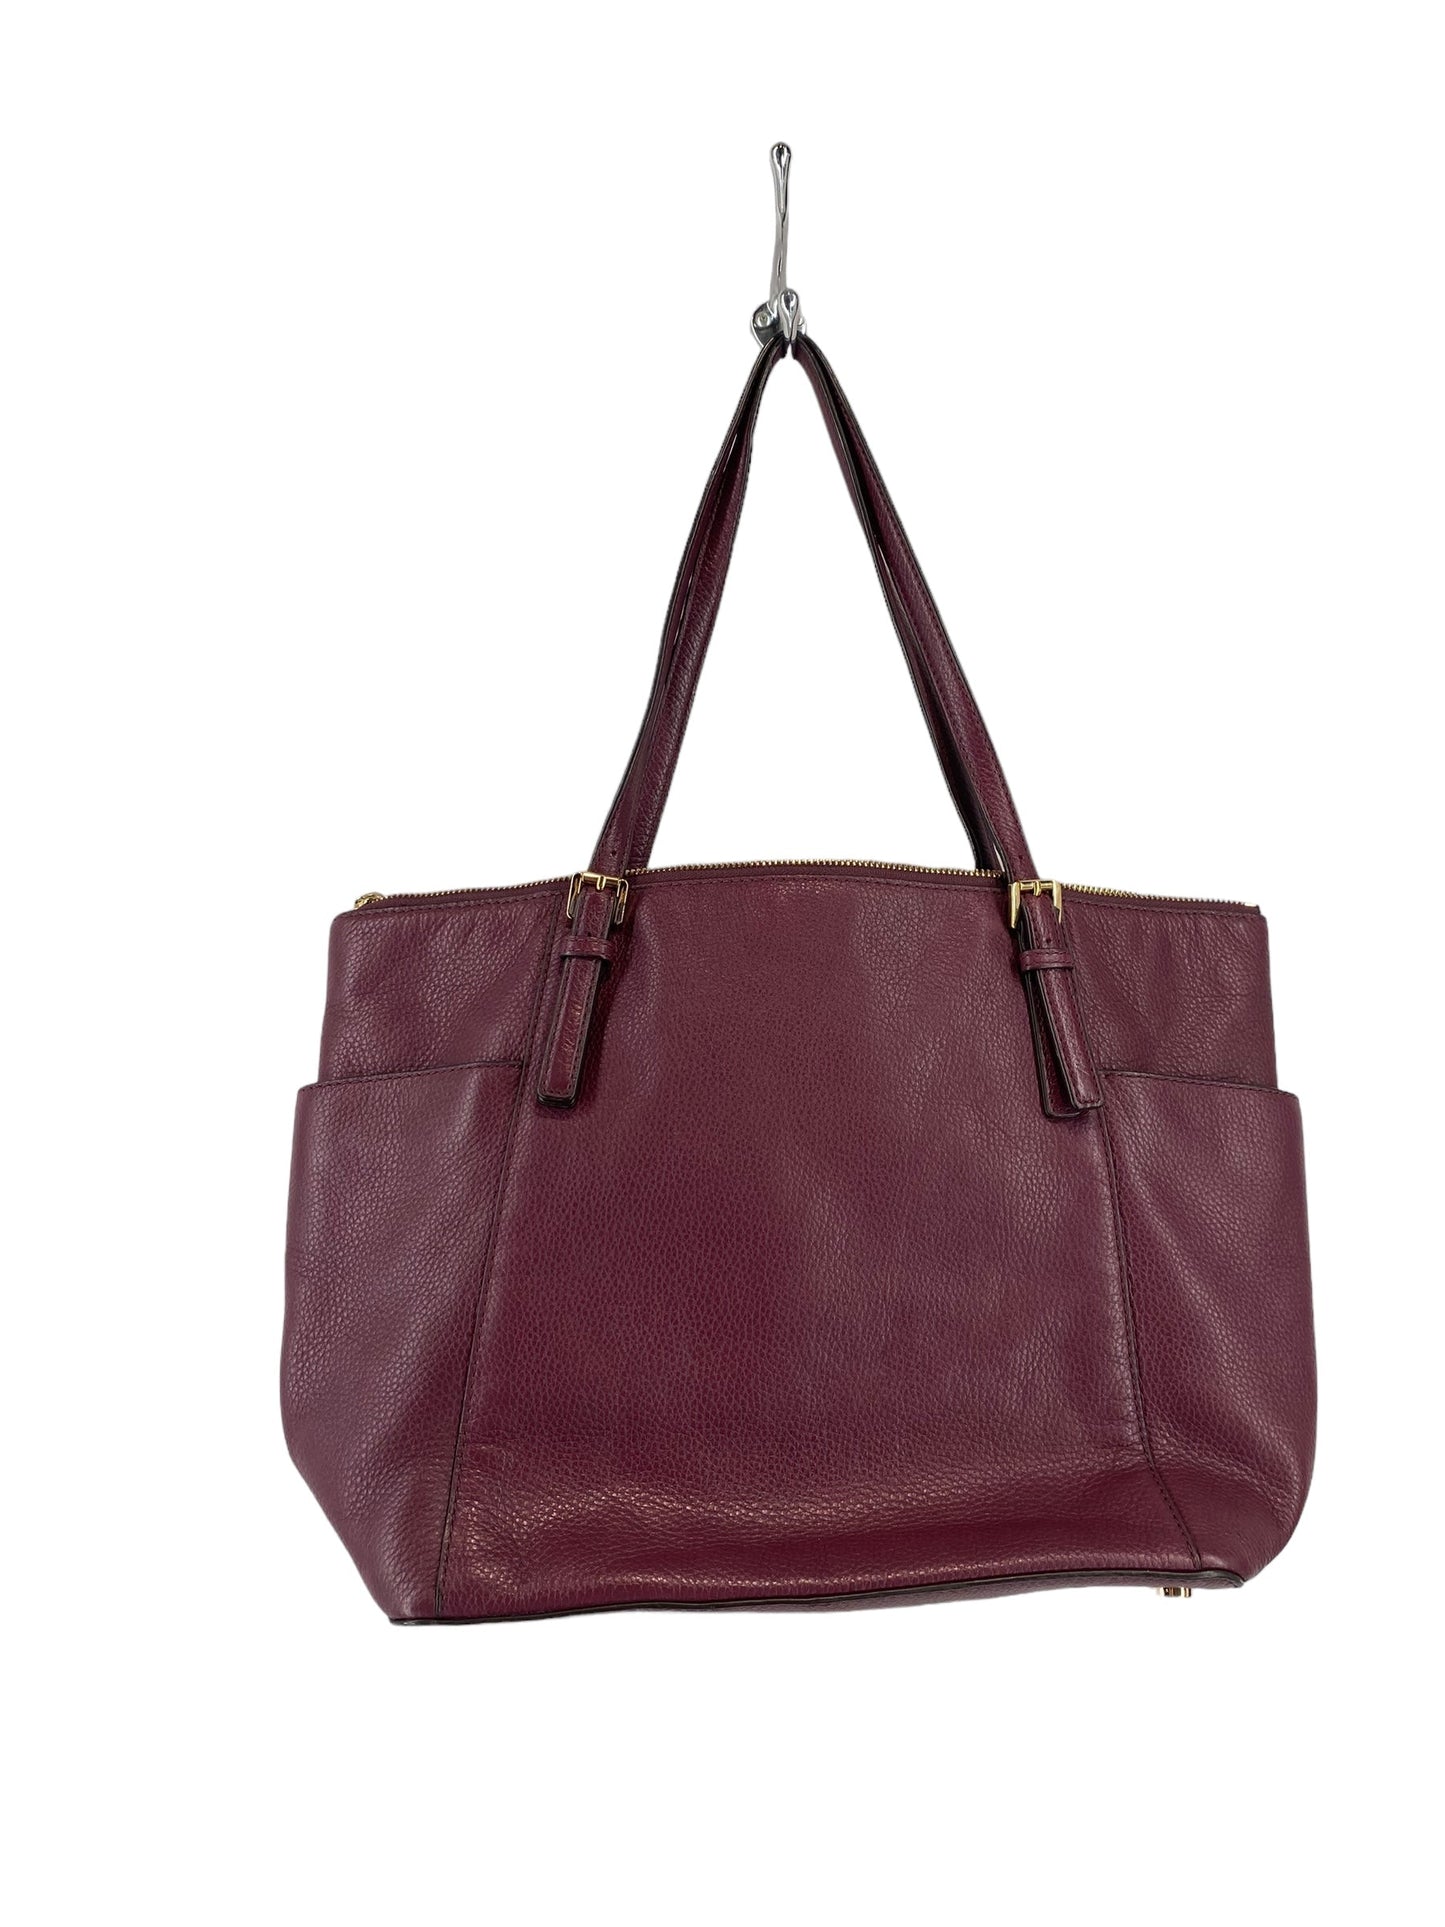 Purple Handbag Designer Michael Kors, Size Large